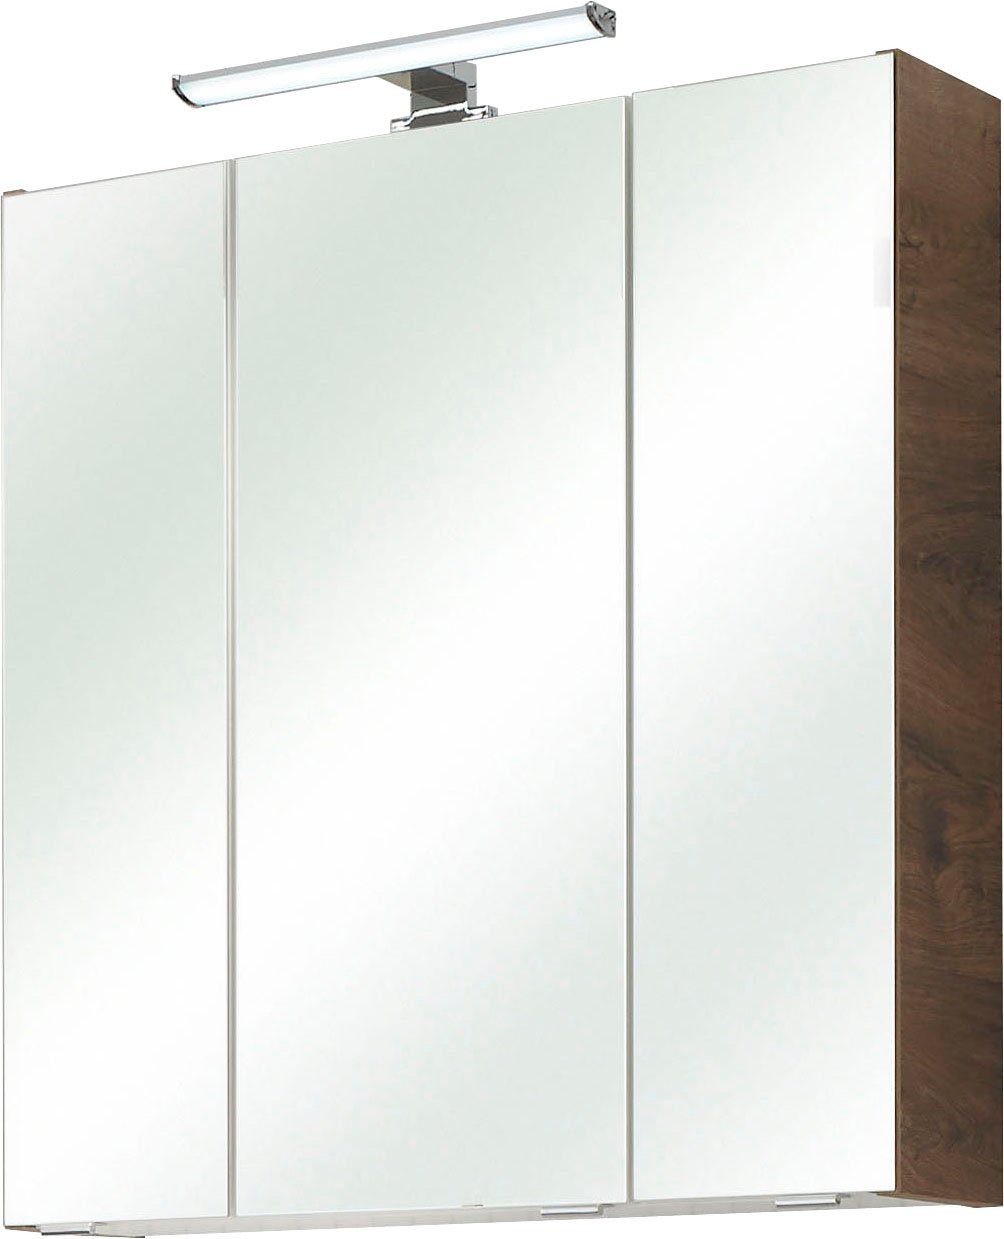 PELIPAL Spiegelschrank Quickset Breite 65 cm, Schalter-/Steckdosenbox 3-türig, LED-Beleuchtung